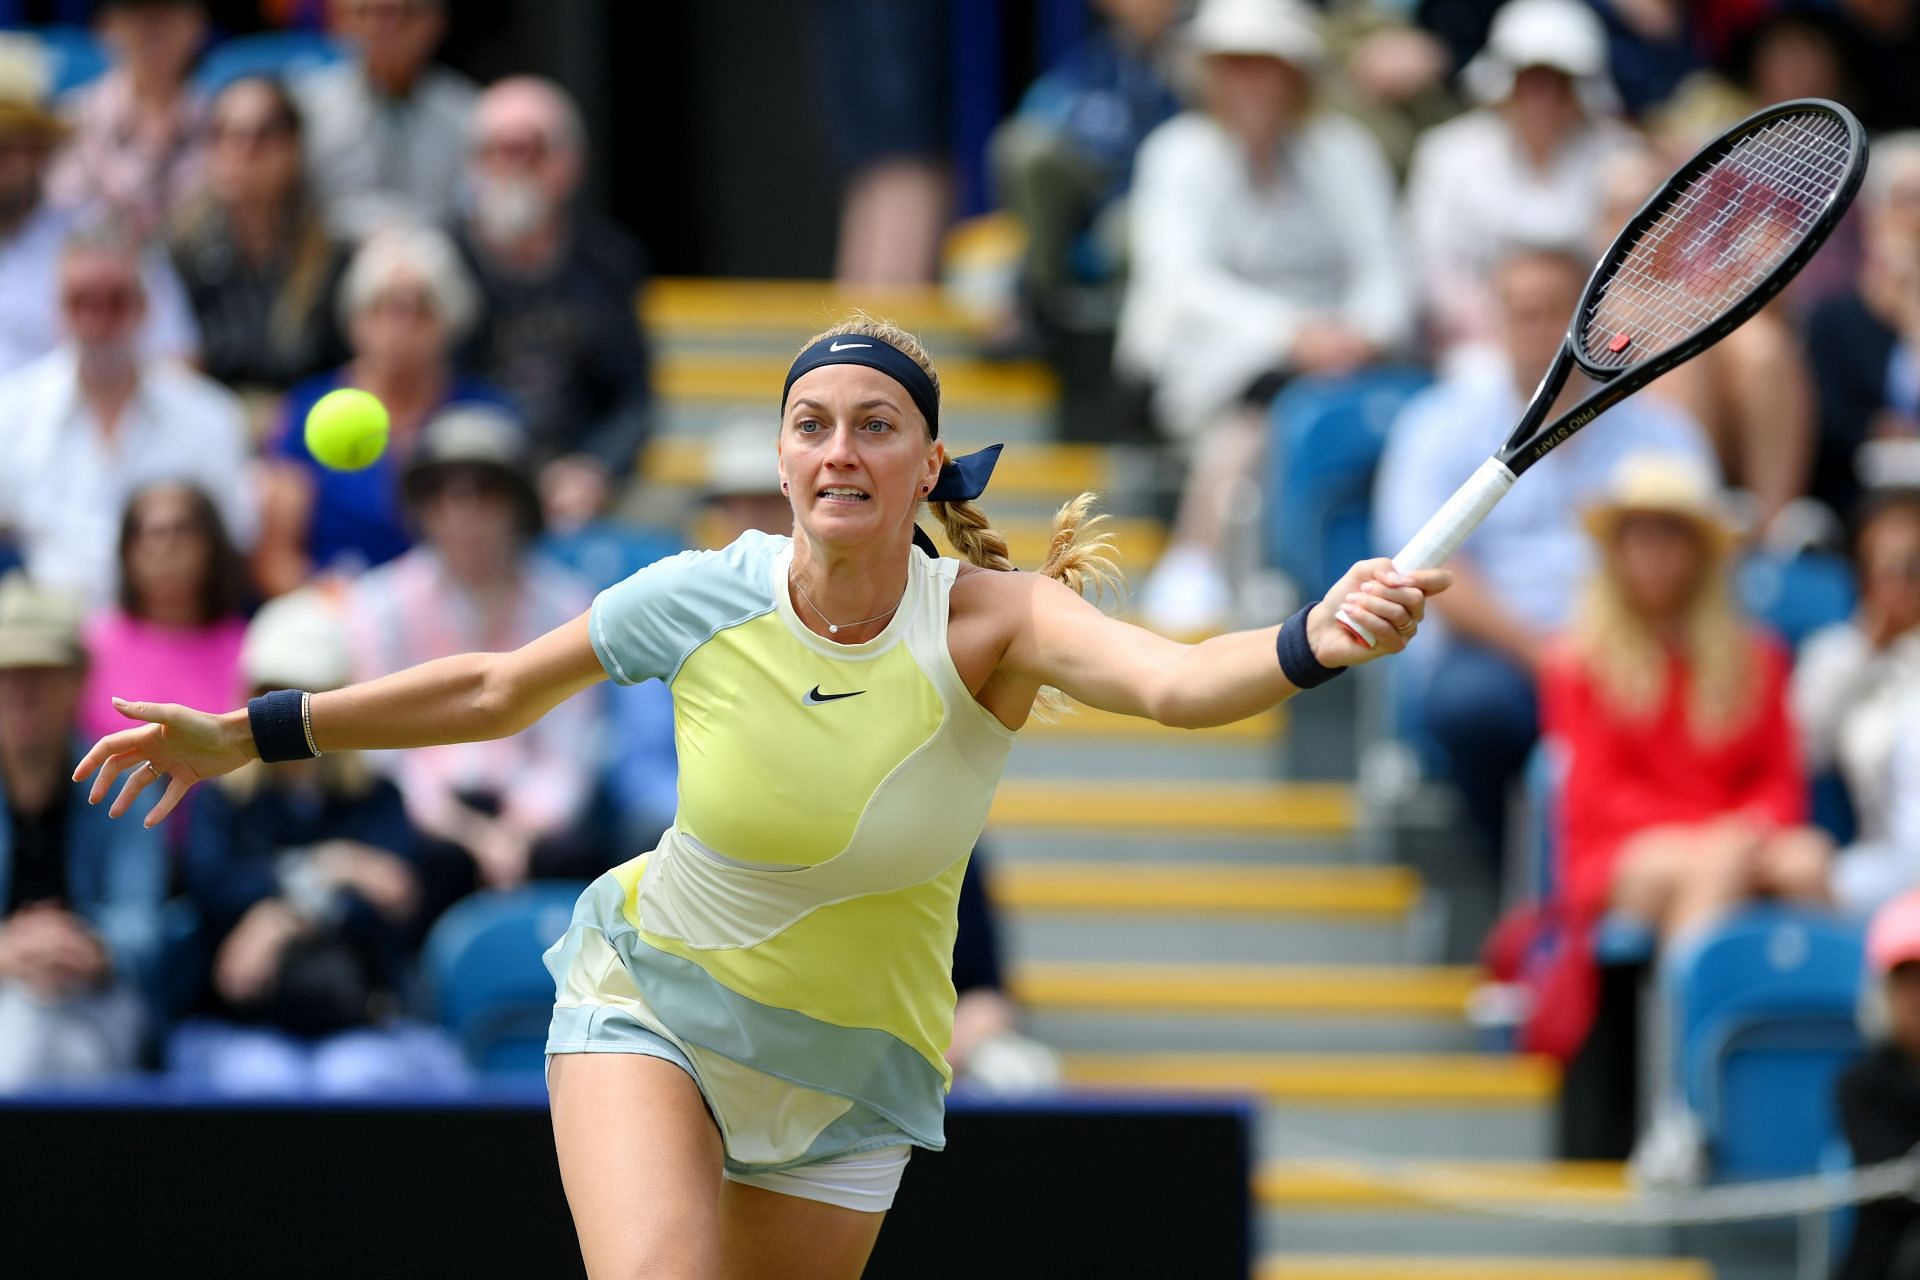 Petra Kvitova will look to keep her momentum going as she heads to Wimbledon next.